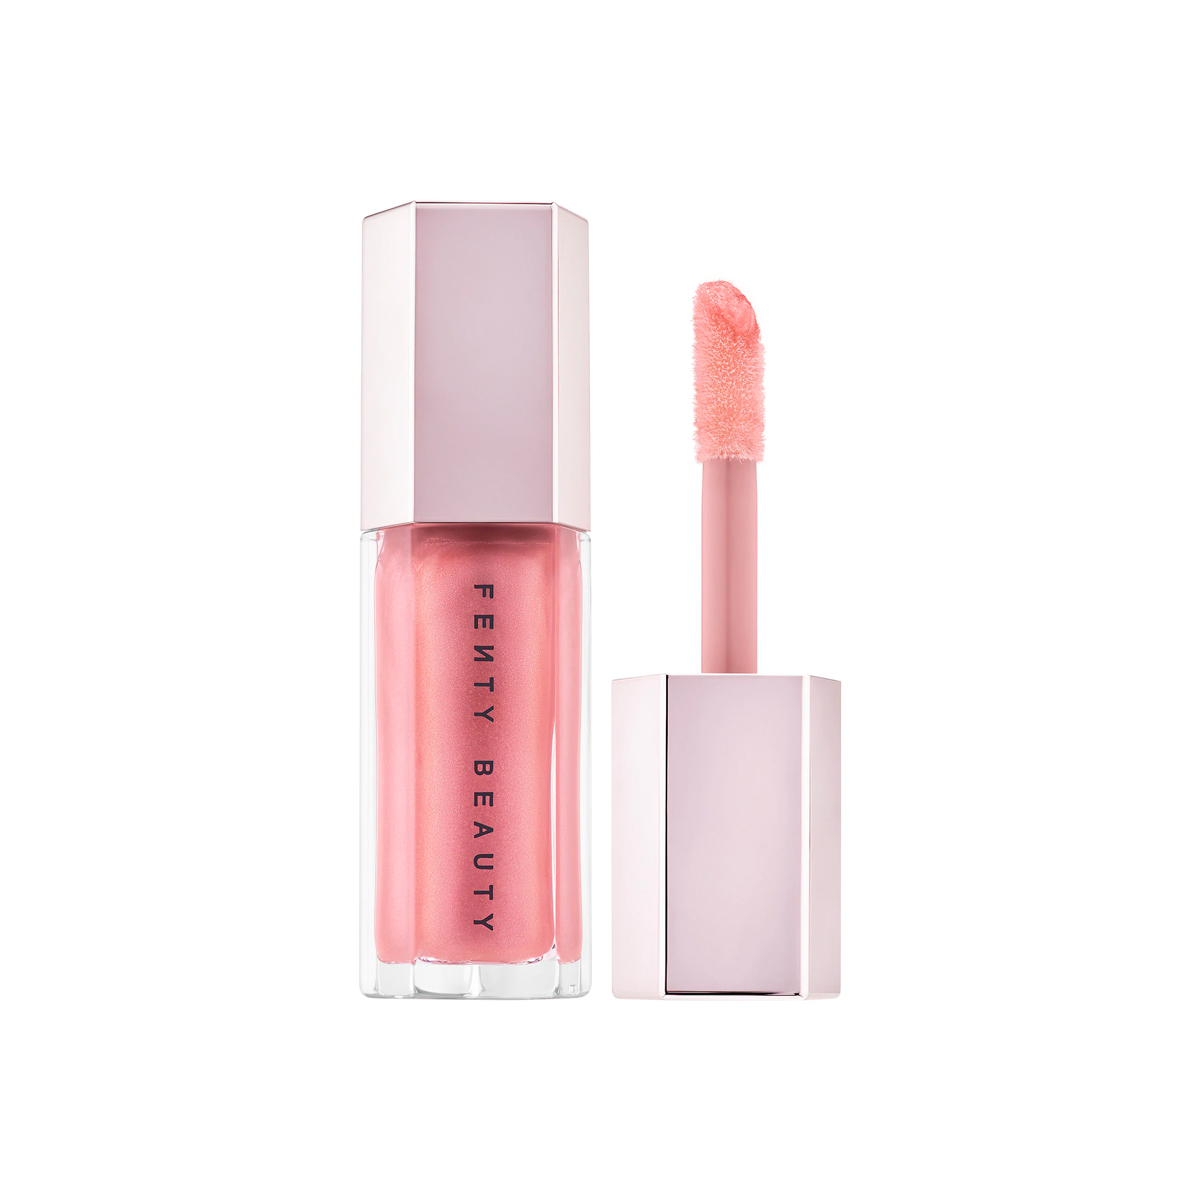 Fenty Beauty Gloss Bomb Universal Lip Luminizer in $weetmouth